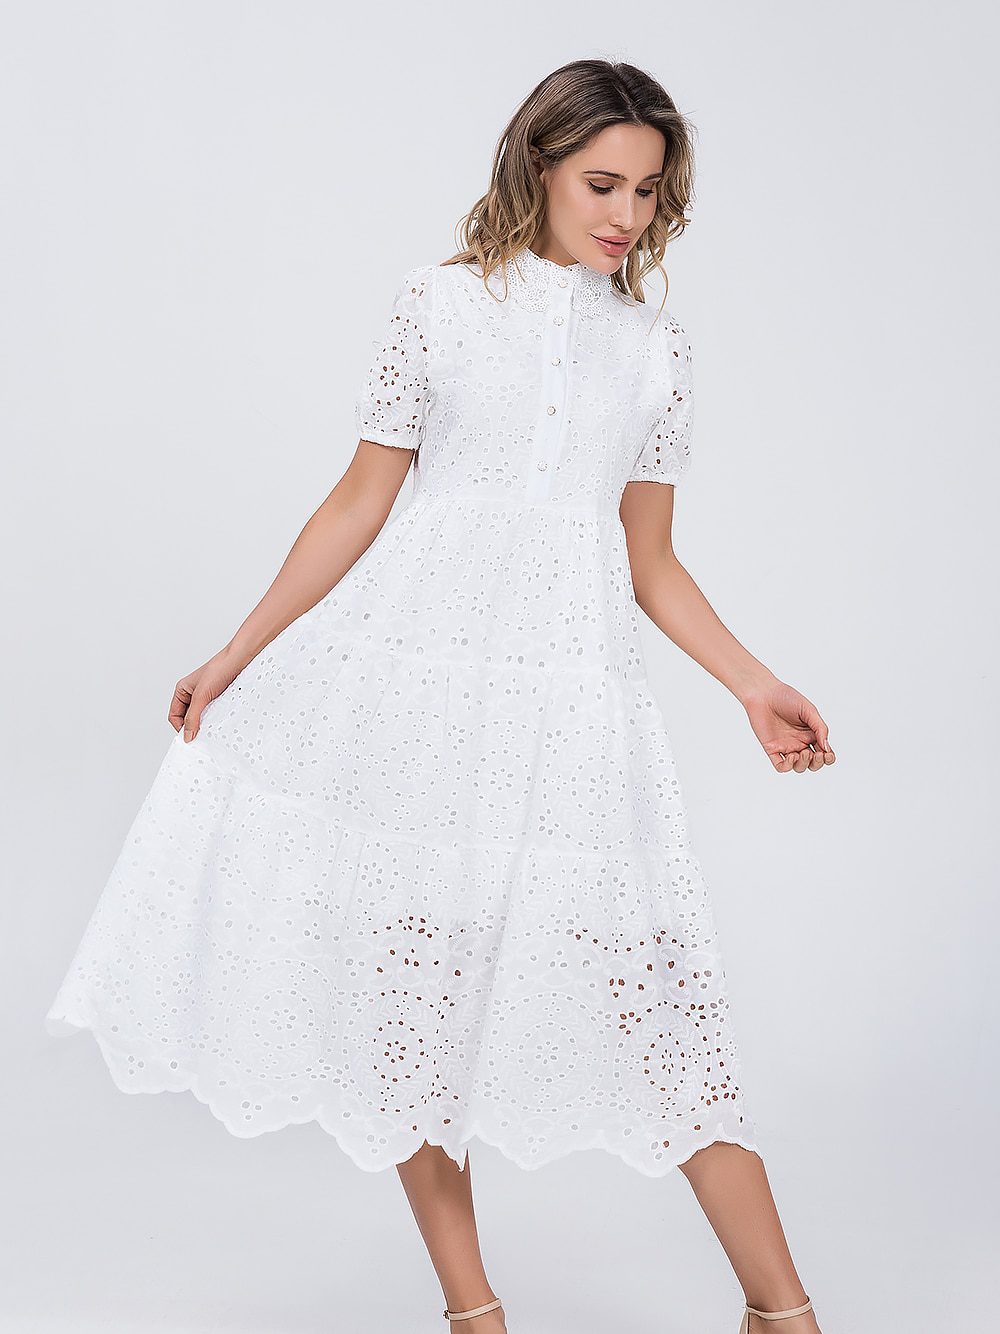 Cotton Hollow Out High Waist Ruffled A-Line White Dress | Uniqistic.com